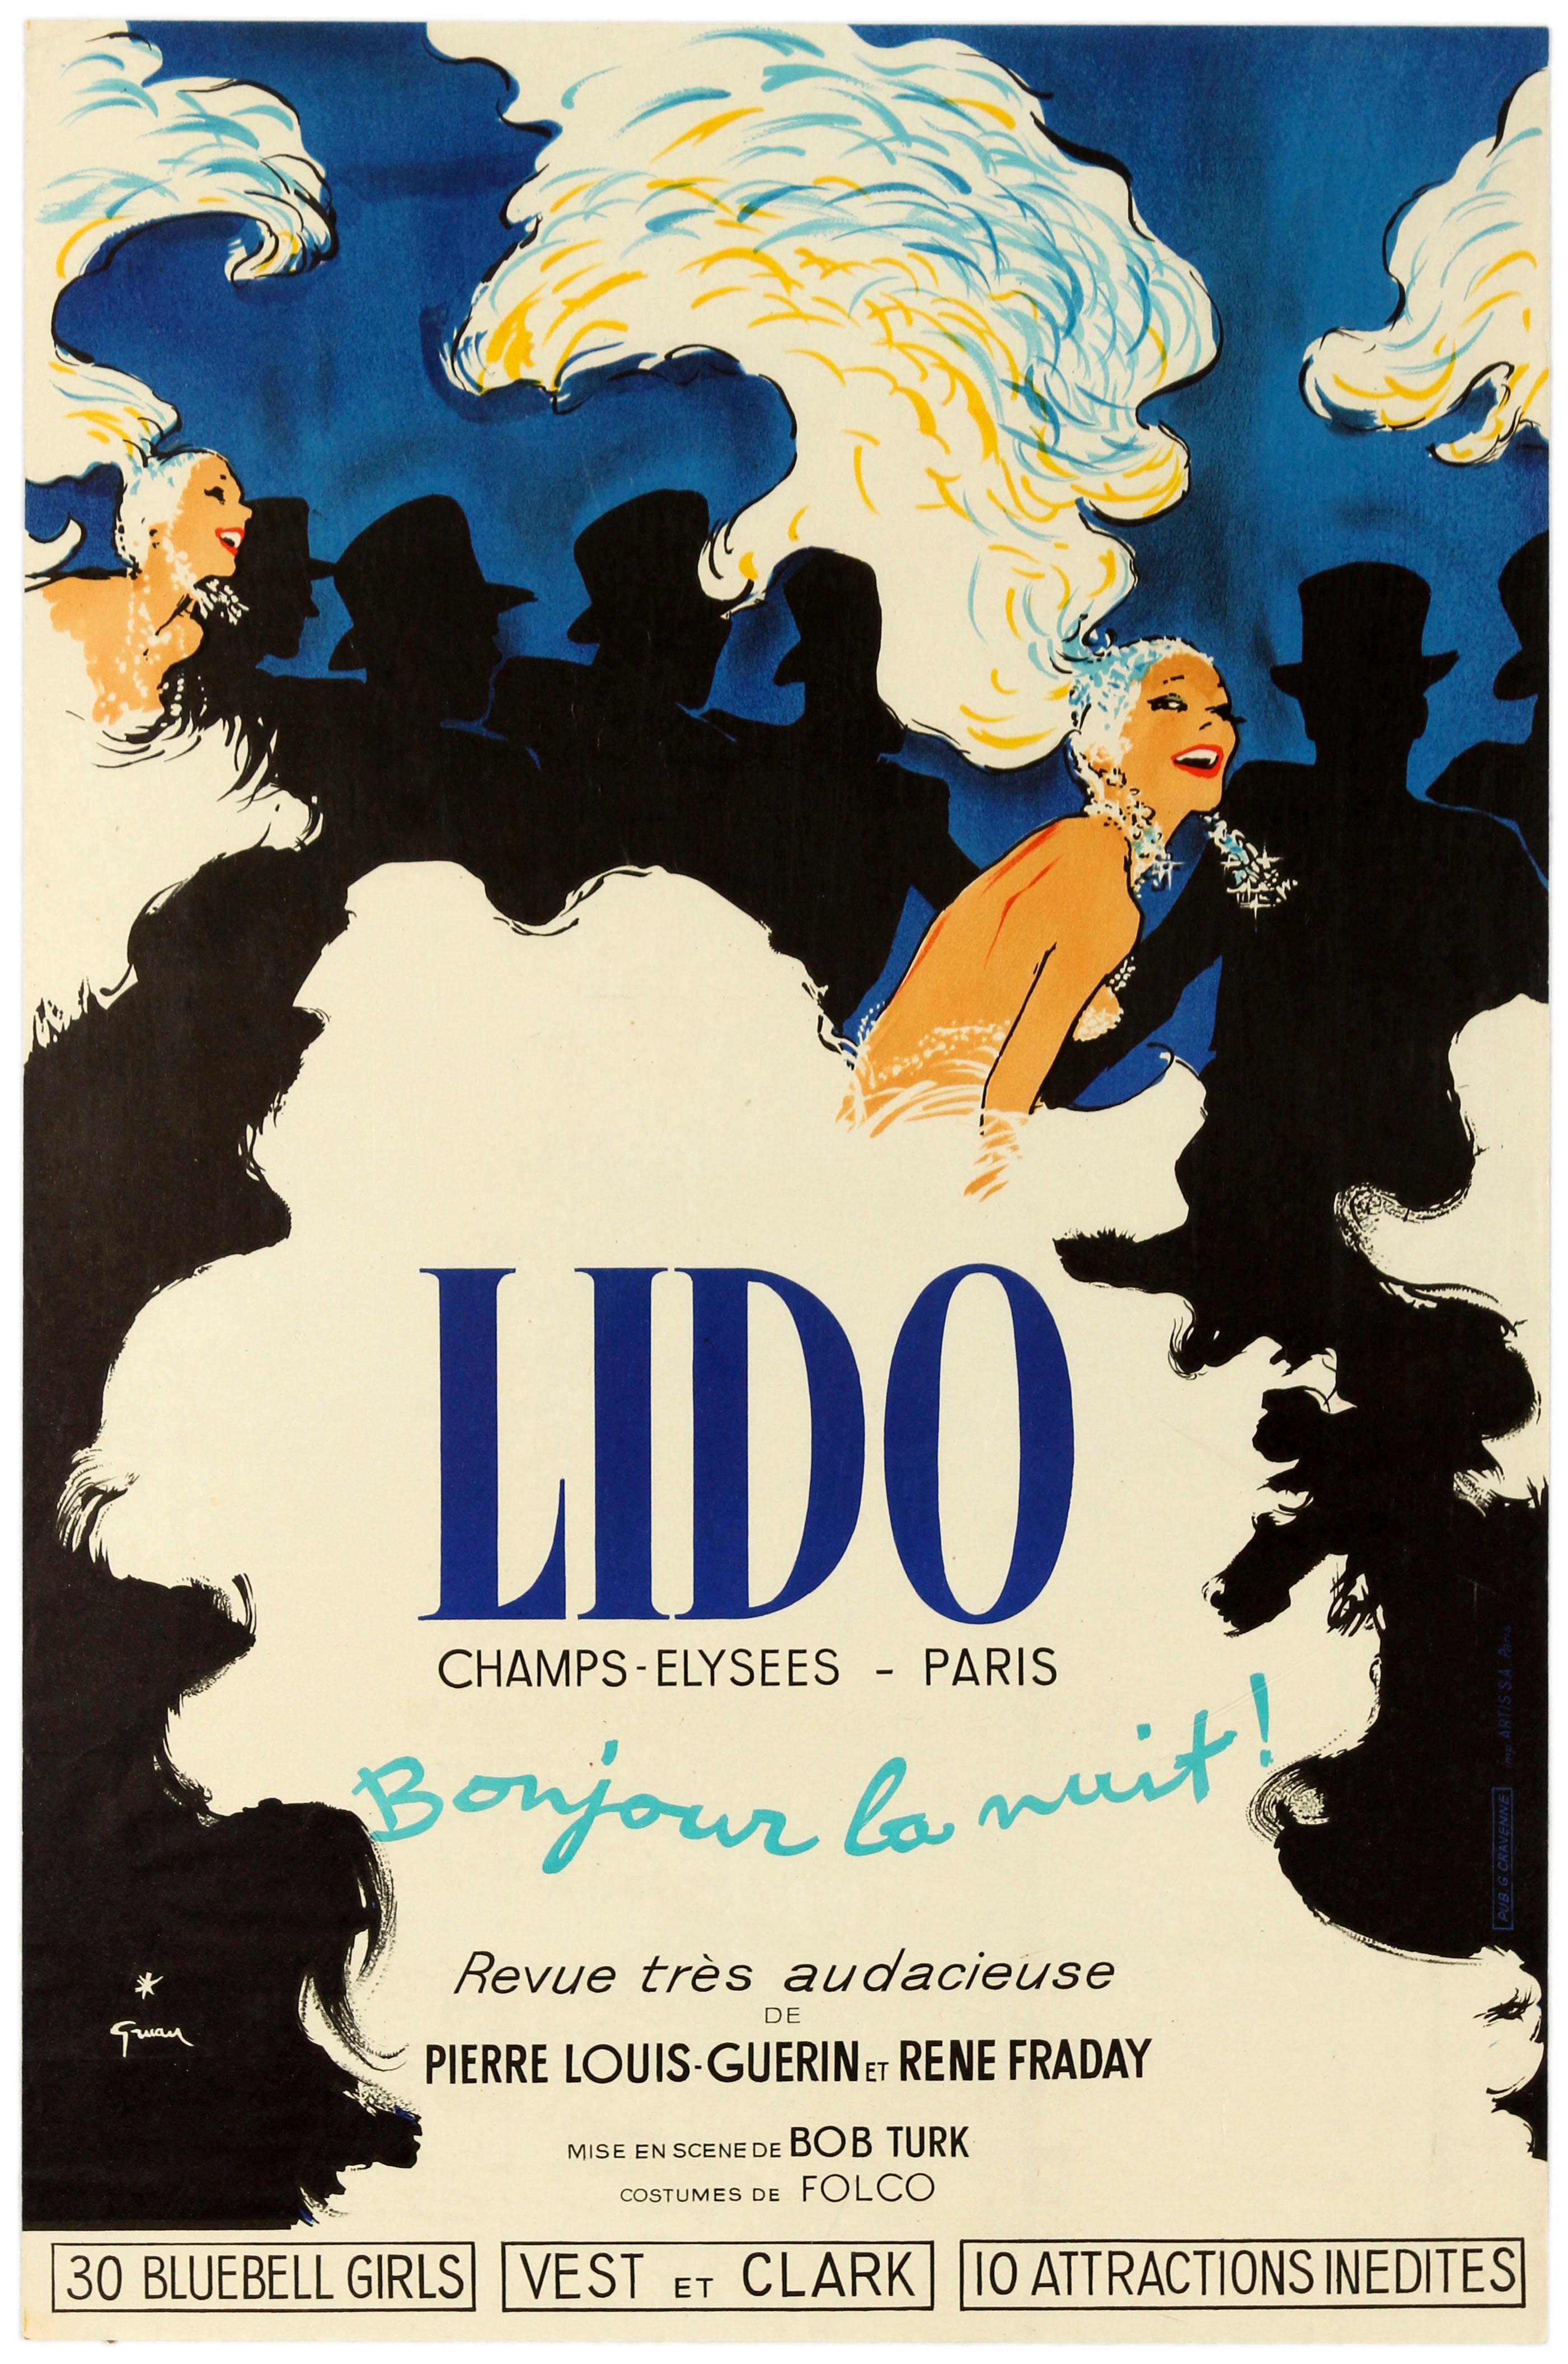 Rene Gruau (Renato de Zavagli) Print - Original Vintage Poster Lido Paris Bonjour La Nuit Cabaret Bluebell Girls Troupe